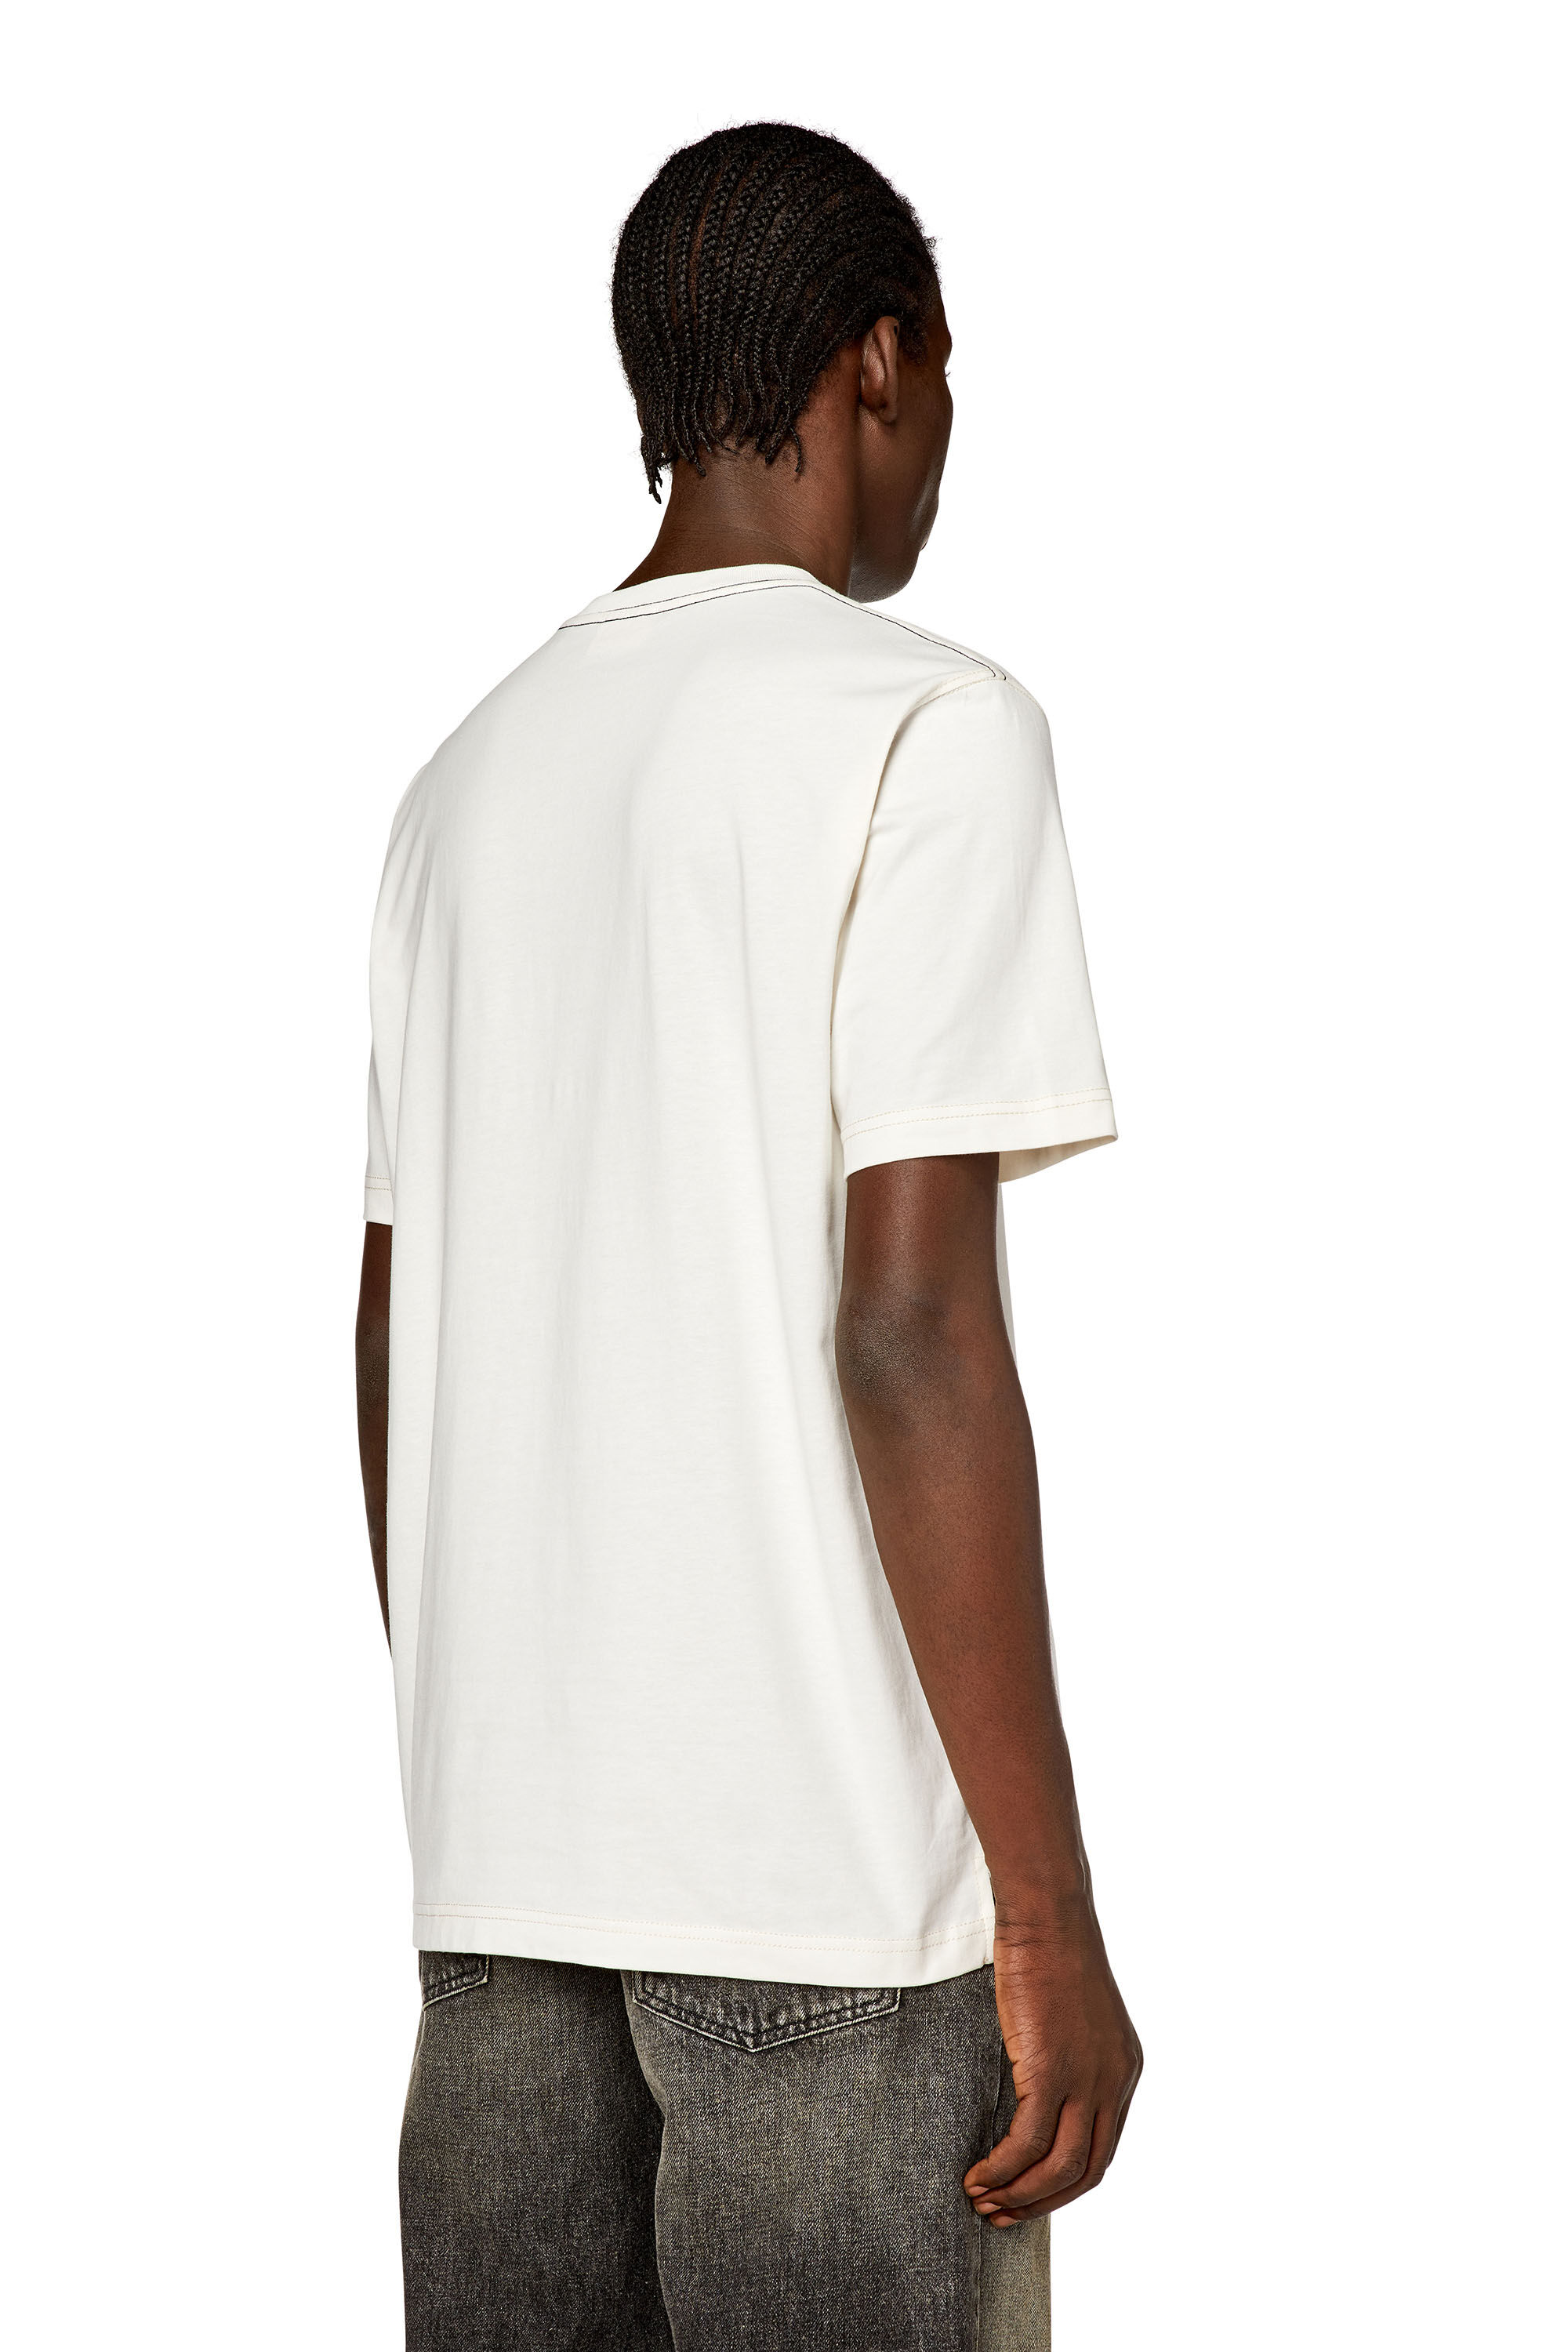 Men's T-shirt with blurry Diesel Industry print | White | Diesel